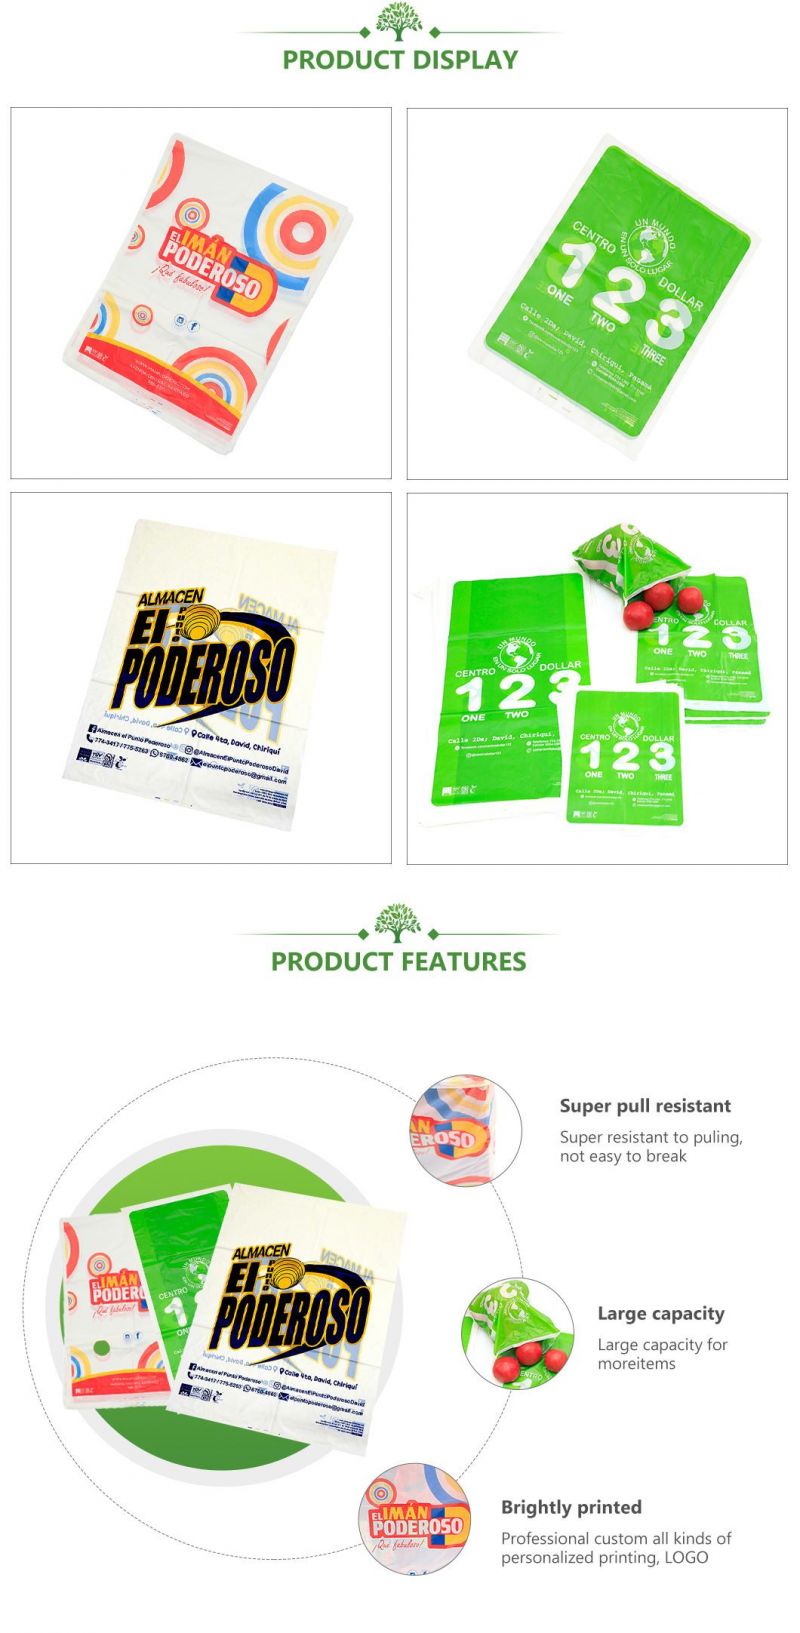 PLA+Pbat/Pbat+Corn Starch Biodegradable Bags, Compostable Bags, Food Bags for Indoor